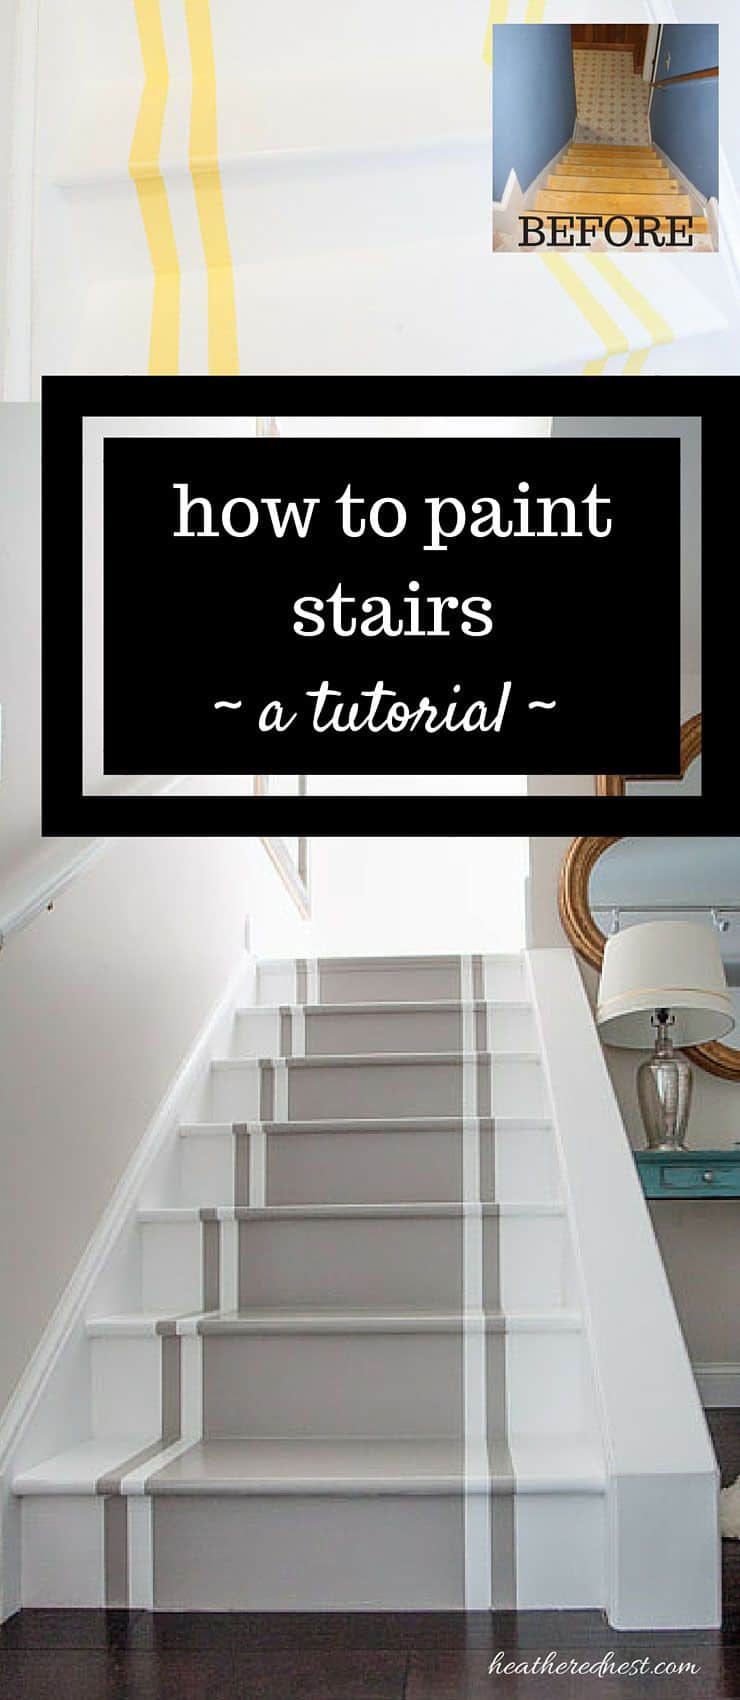 Painted on stair runner